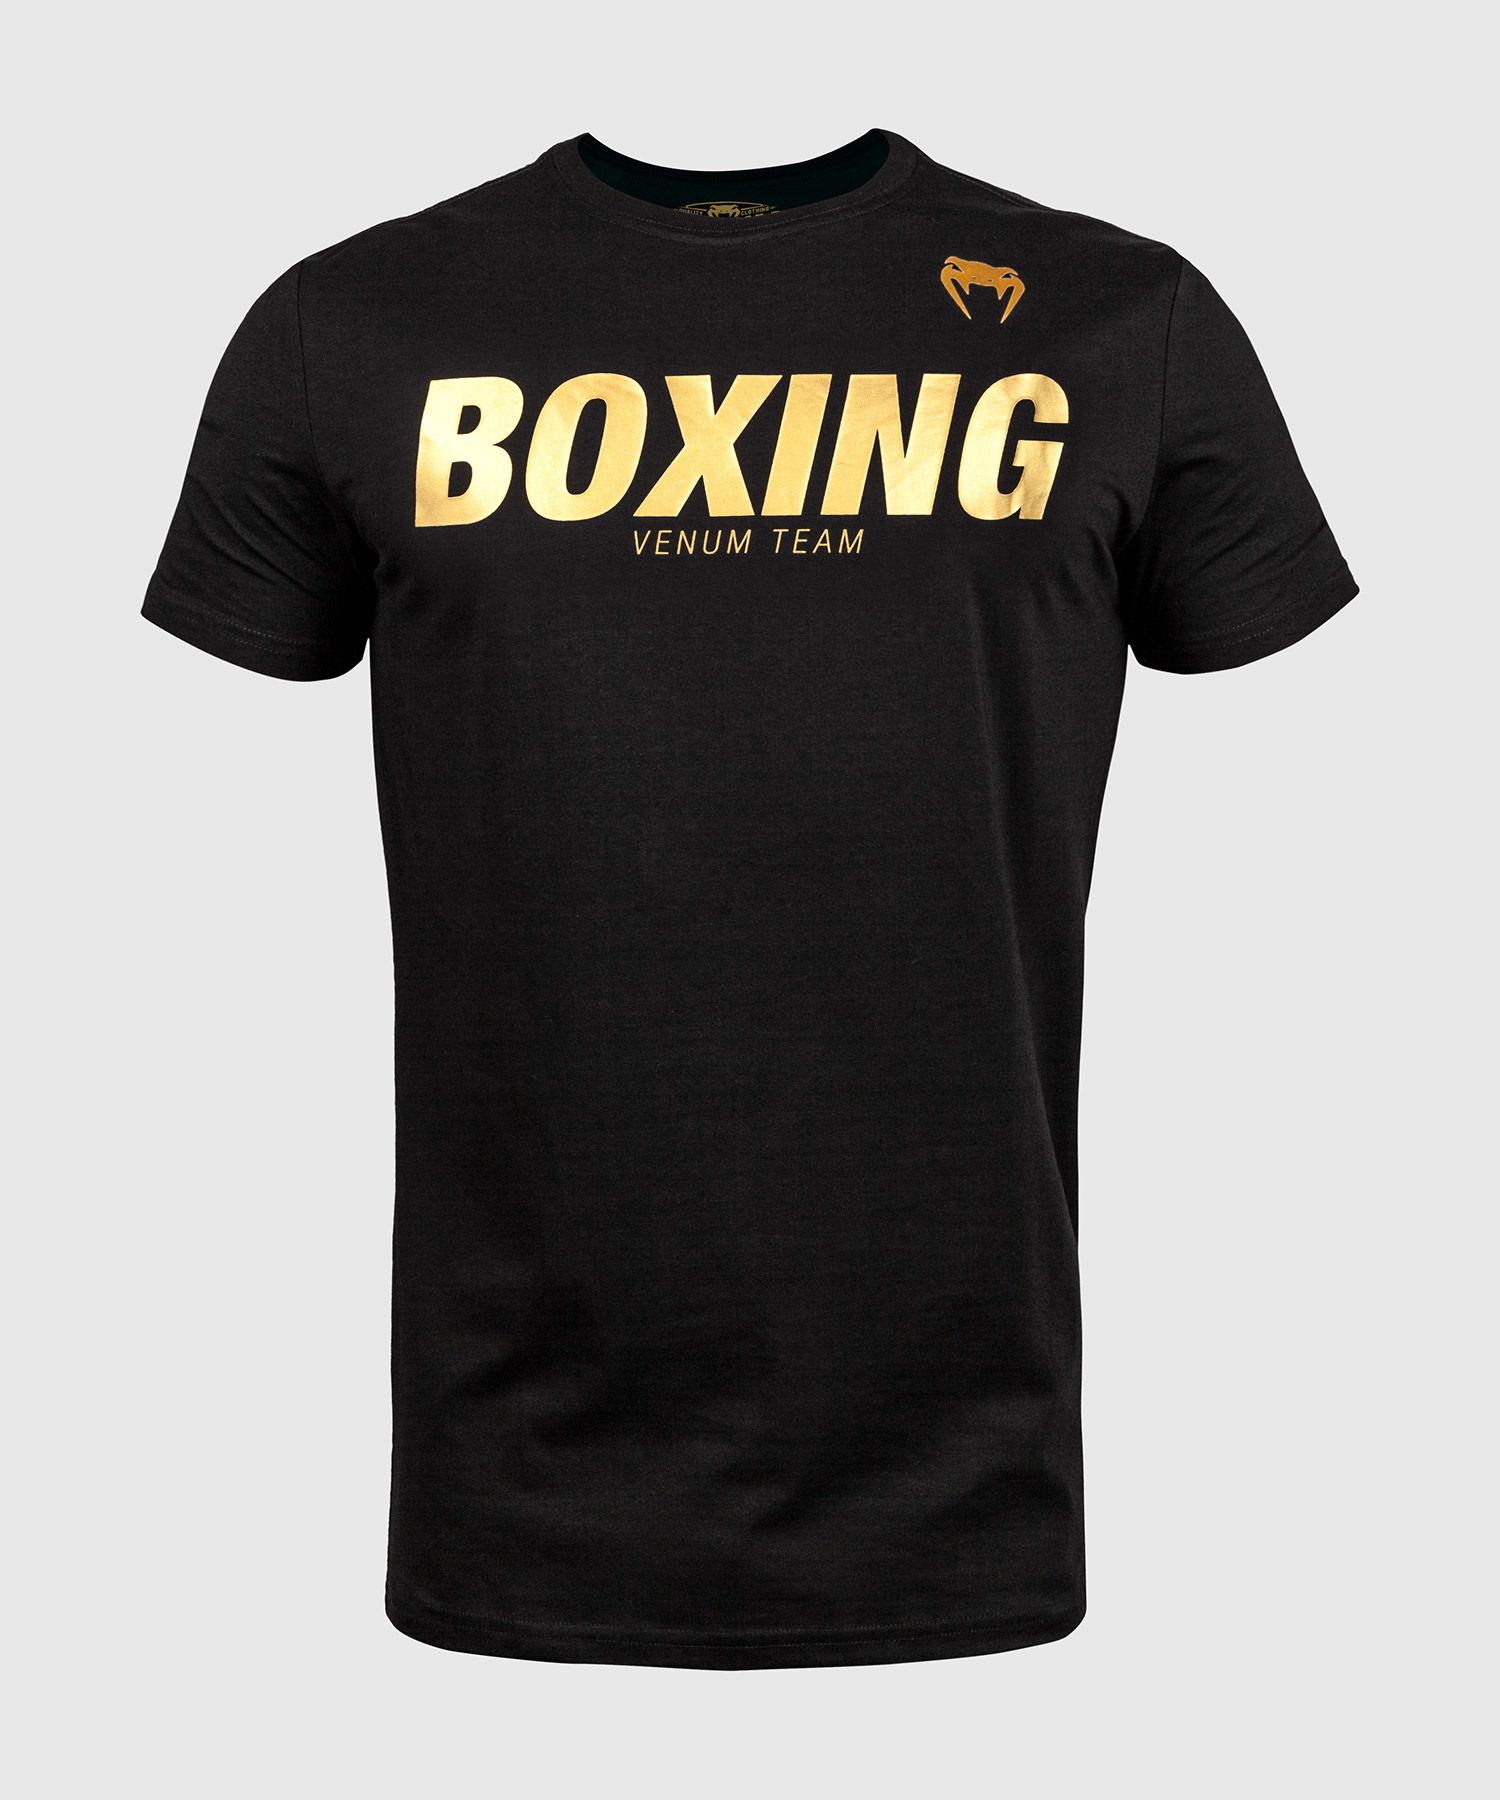 T-shirt Venum Boxing VT - Noir/Or